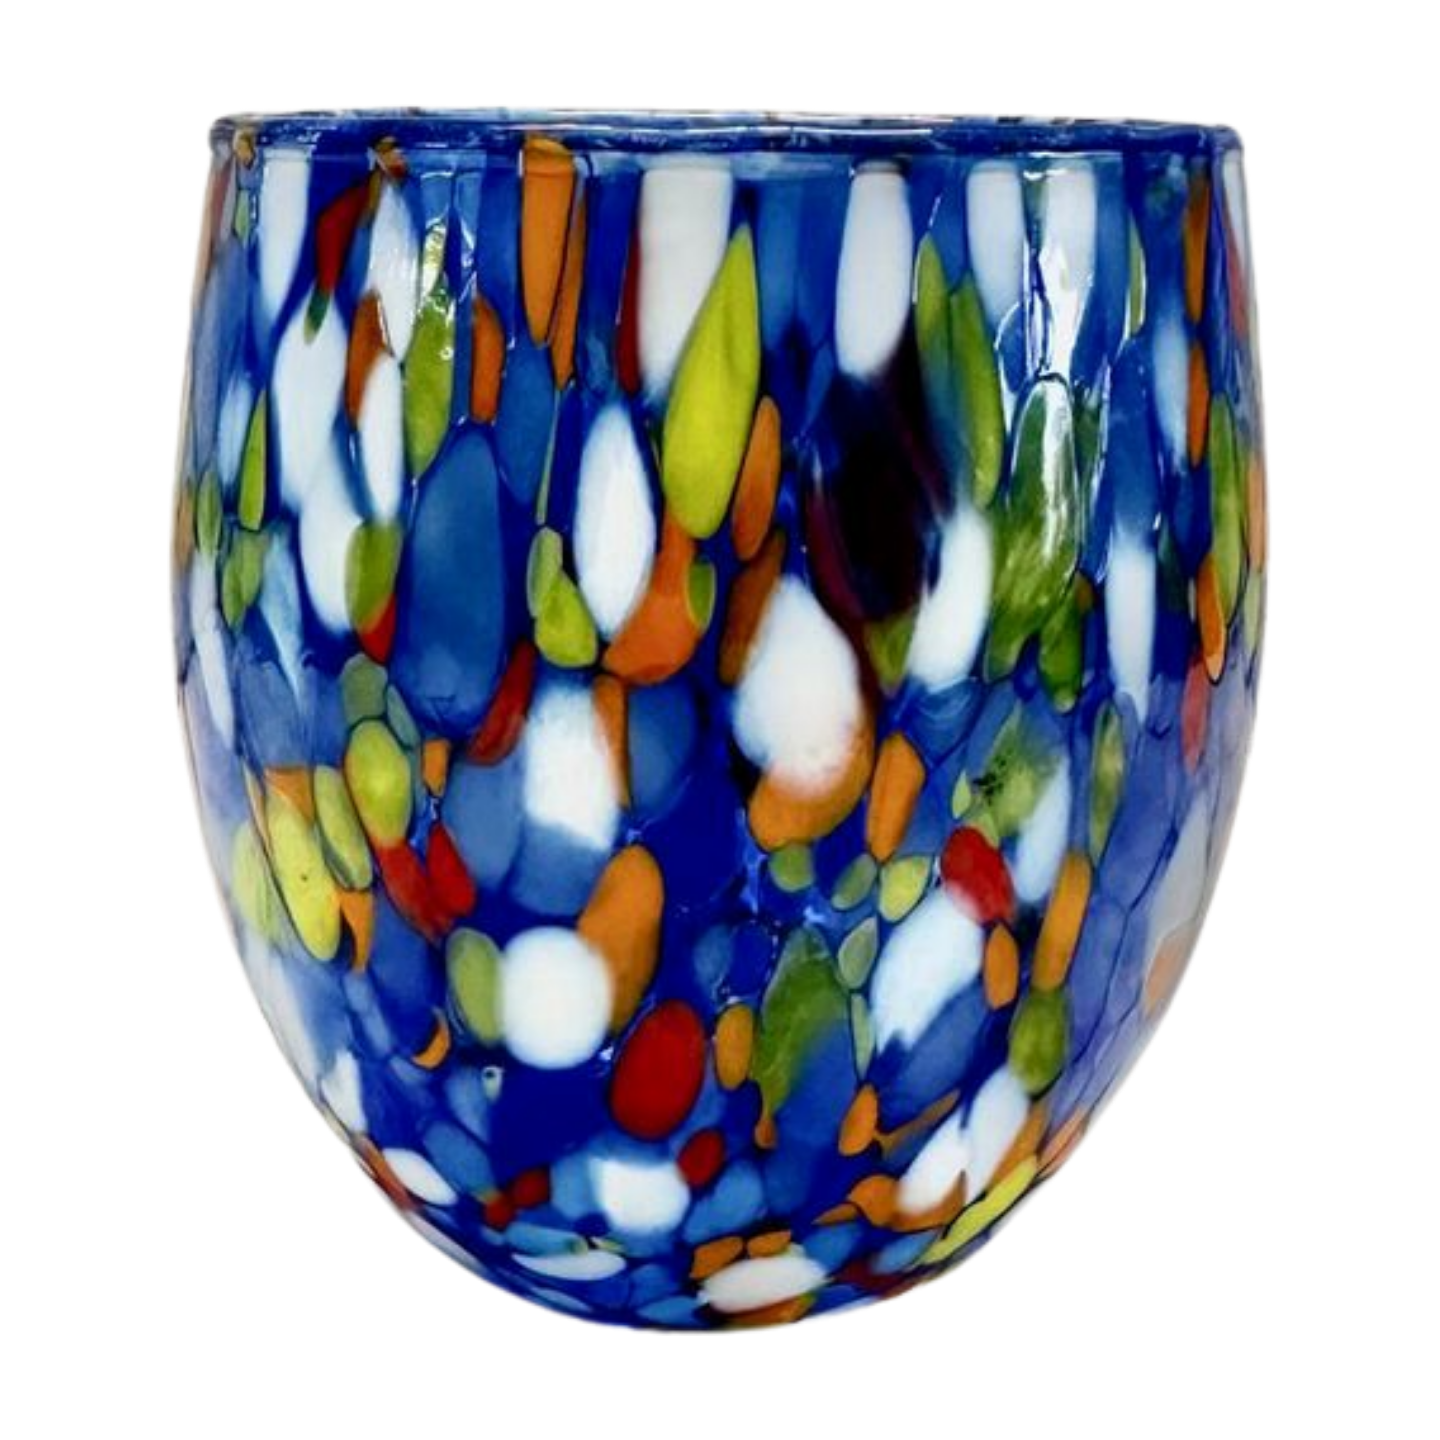 Stemless Murano wine glass in classic blue color.